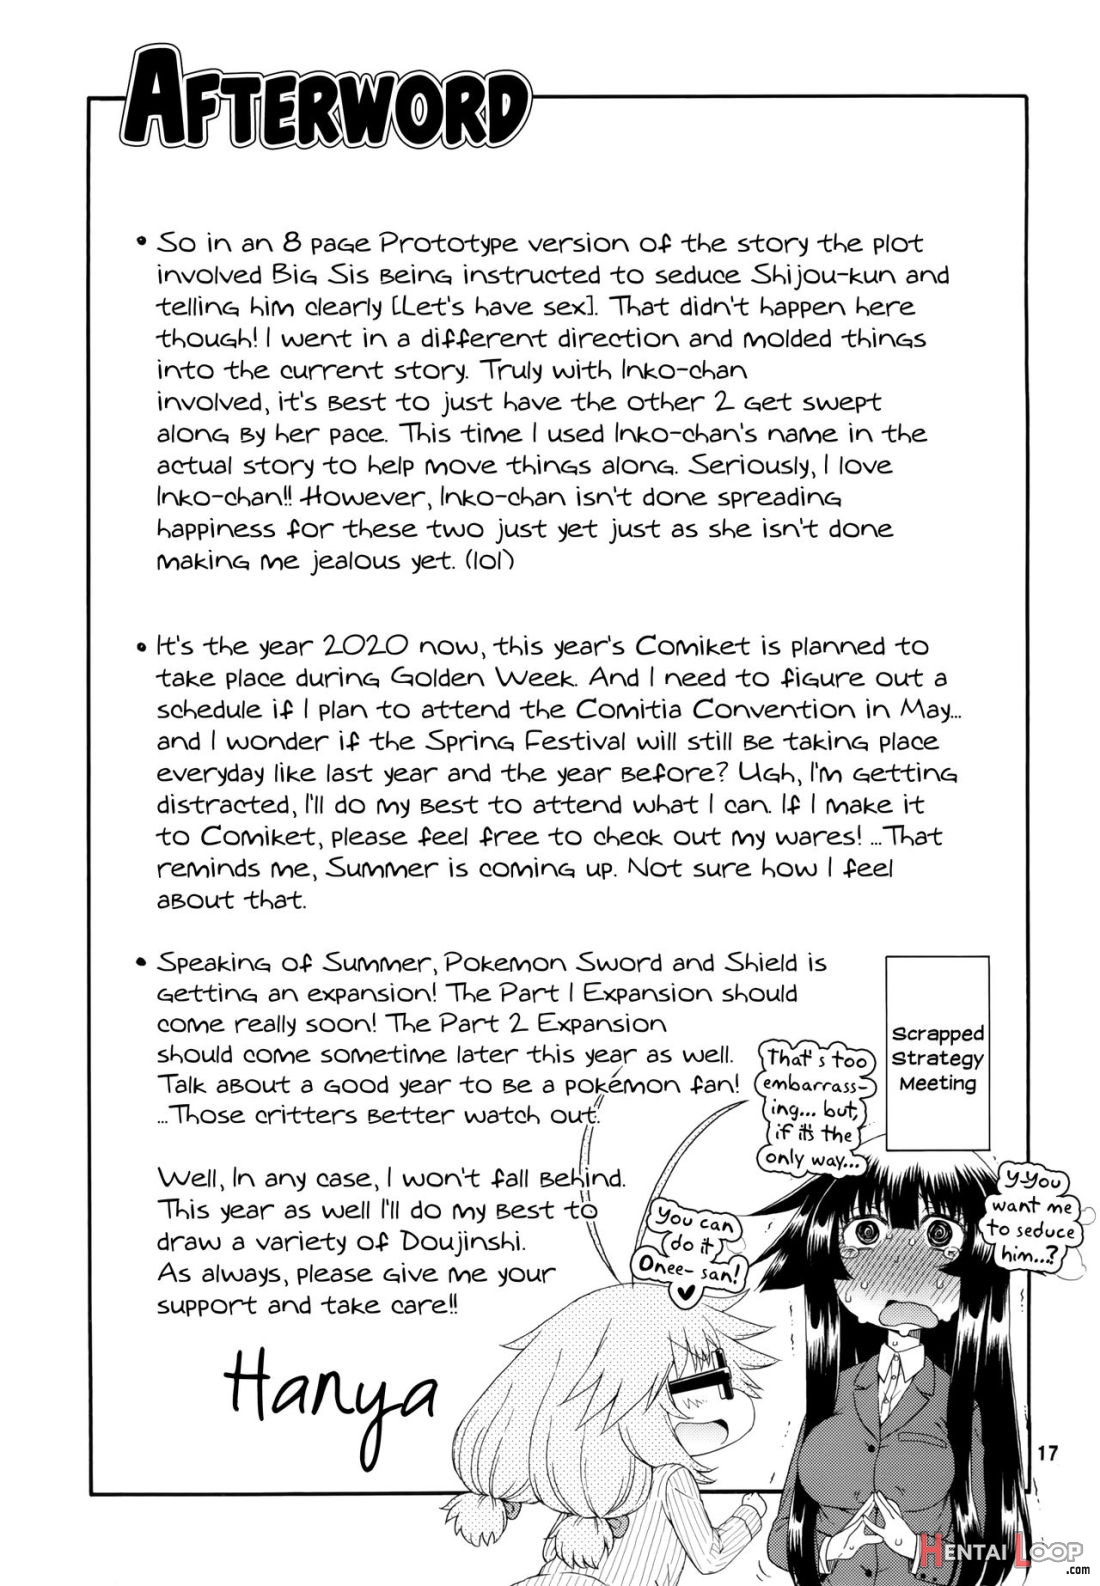 Yobae Inko-chan S8 page 16